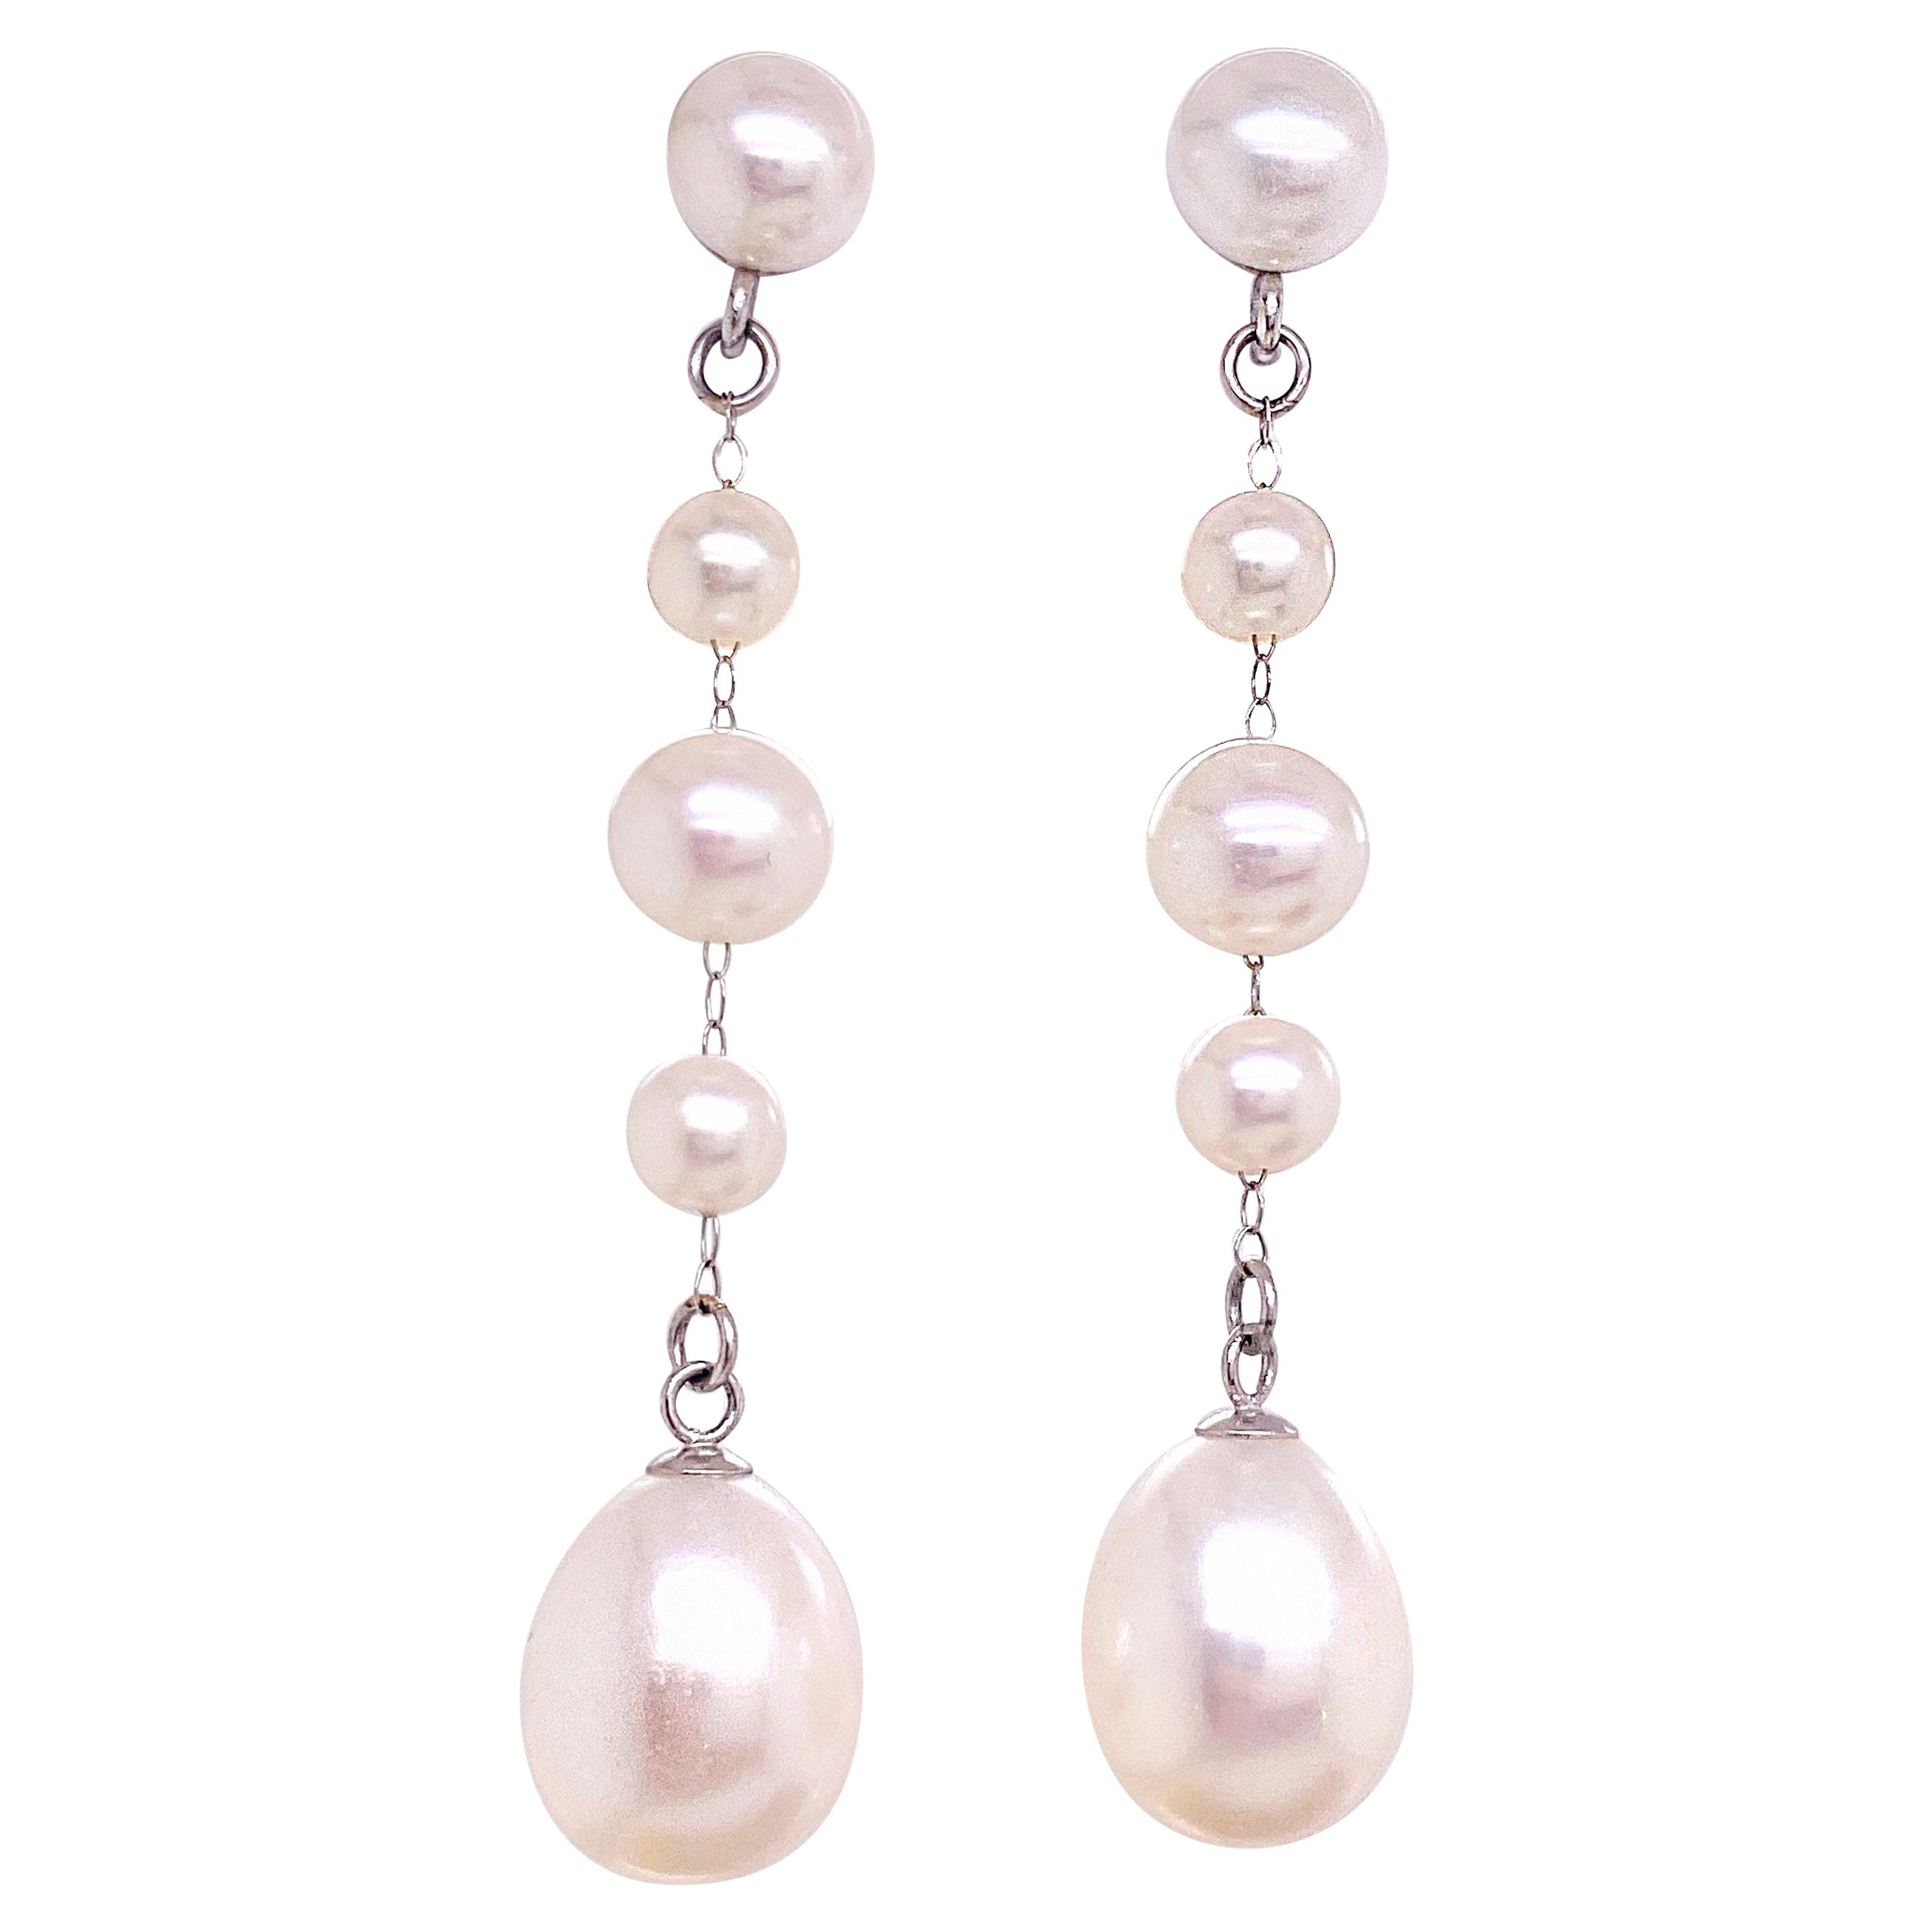 Five Cultured Pearl Dangle Earrings, White Gold Genuine Pearl Earrings